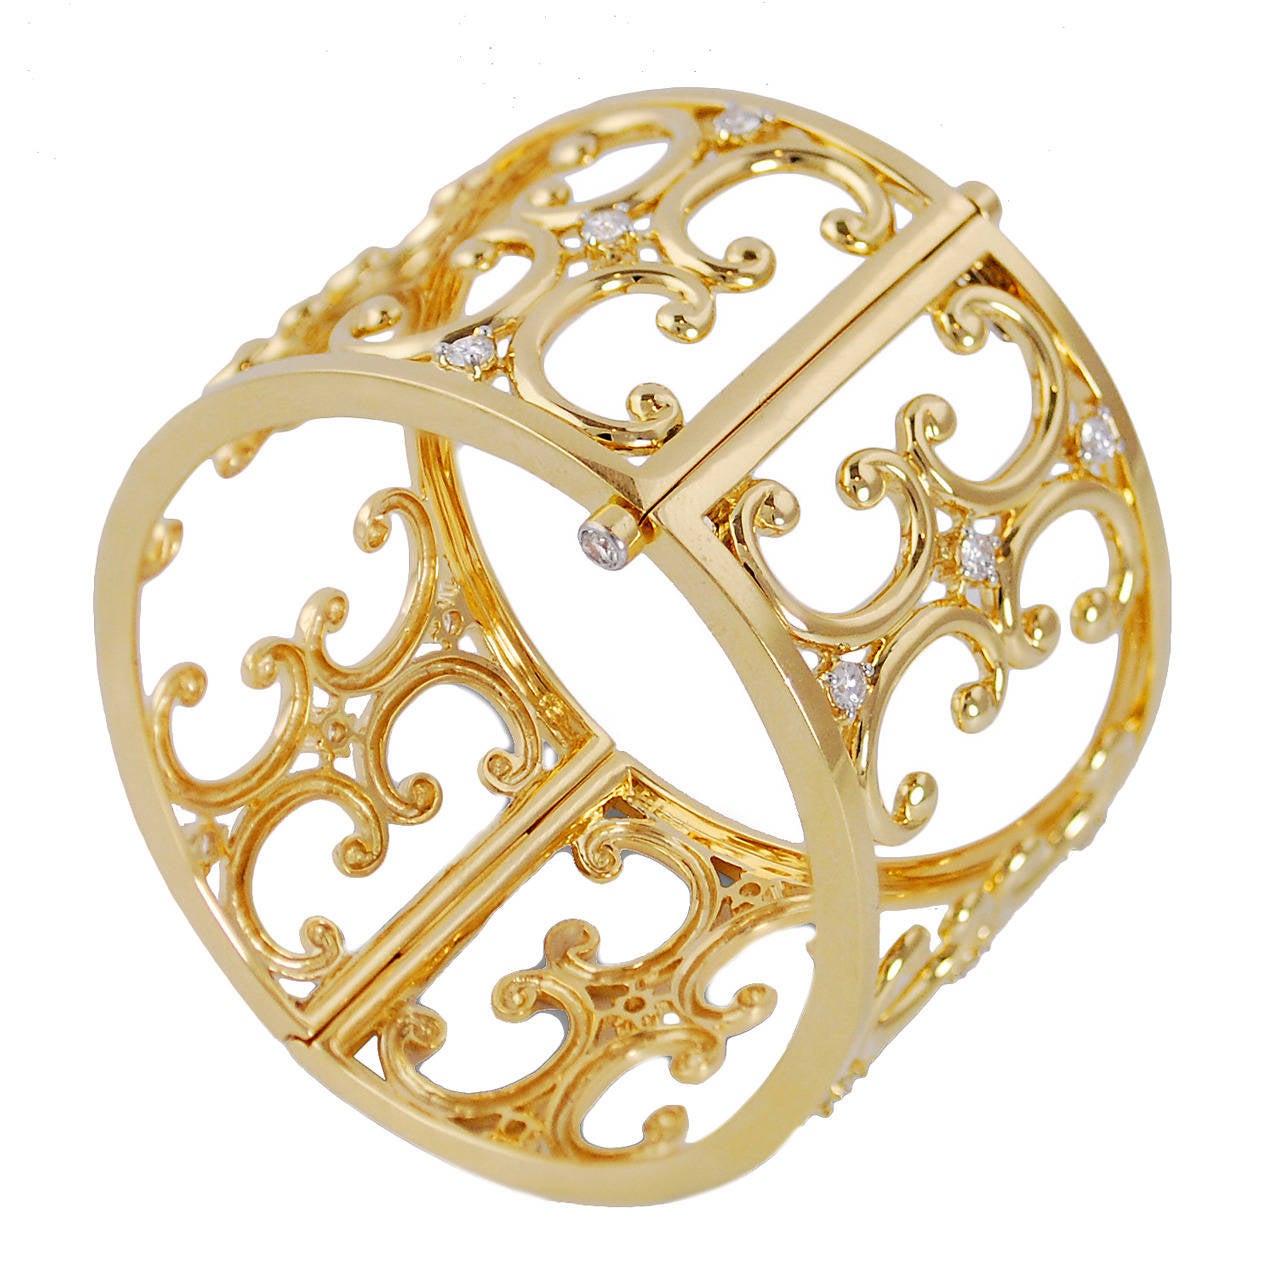 A Diamond and Gold Gate Cuff Bracelet by Monica Rich Kosann For Sale